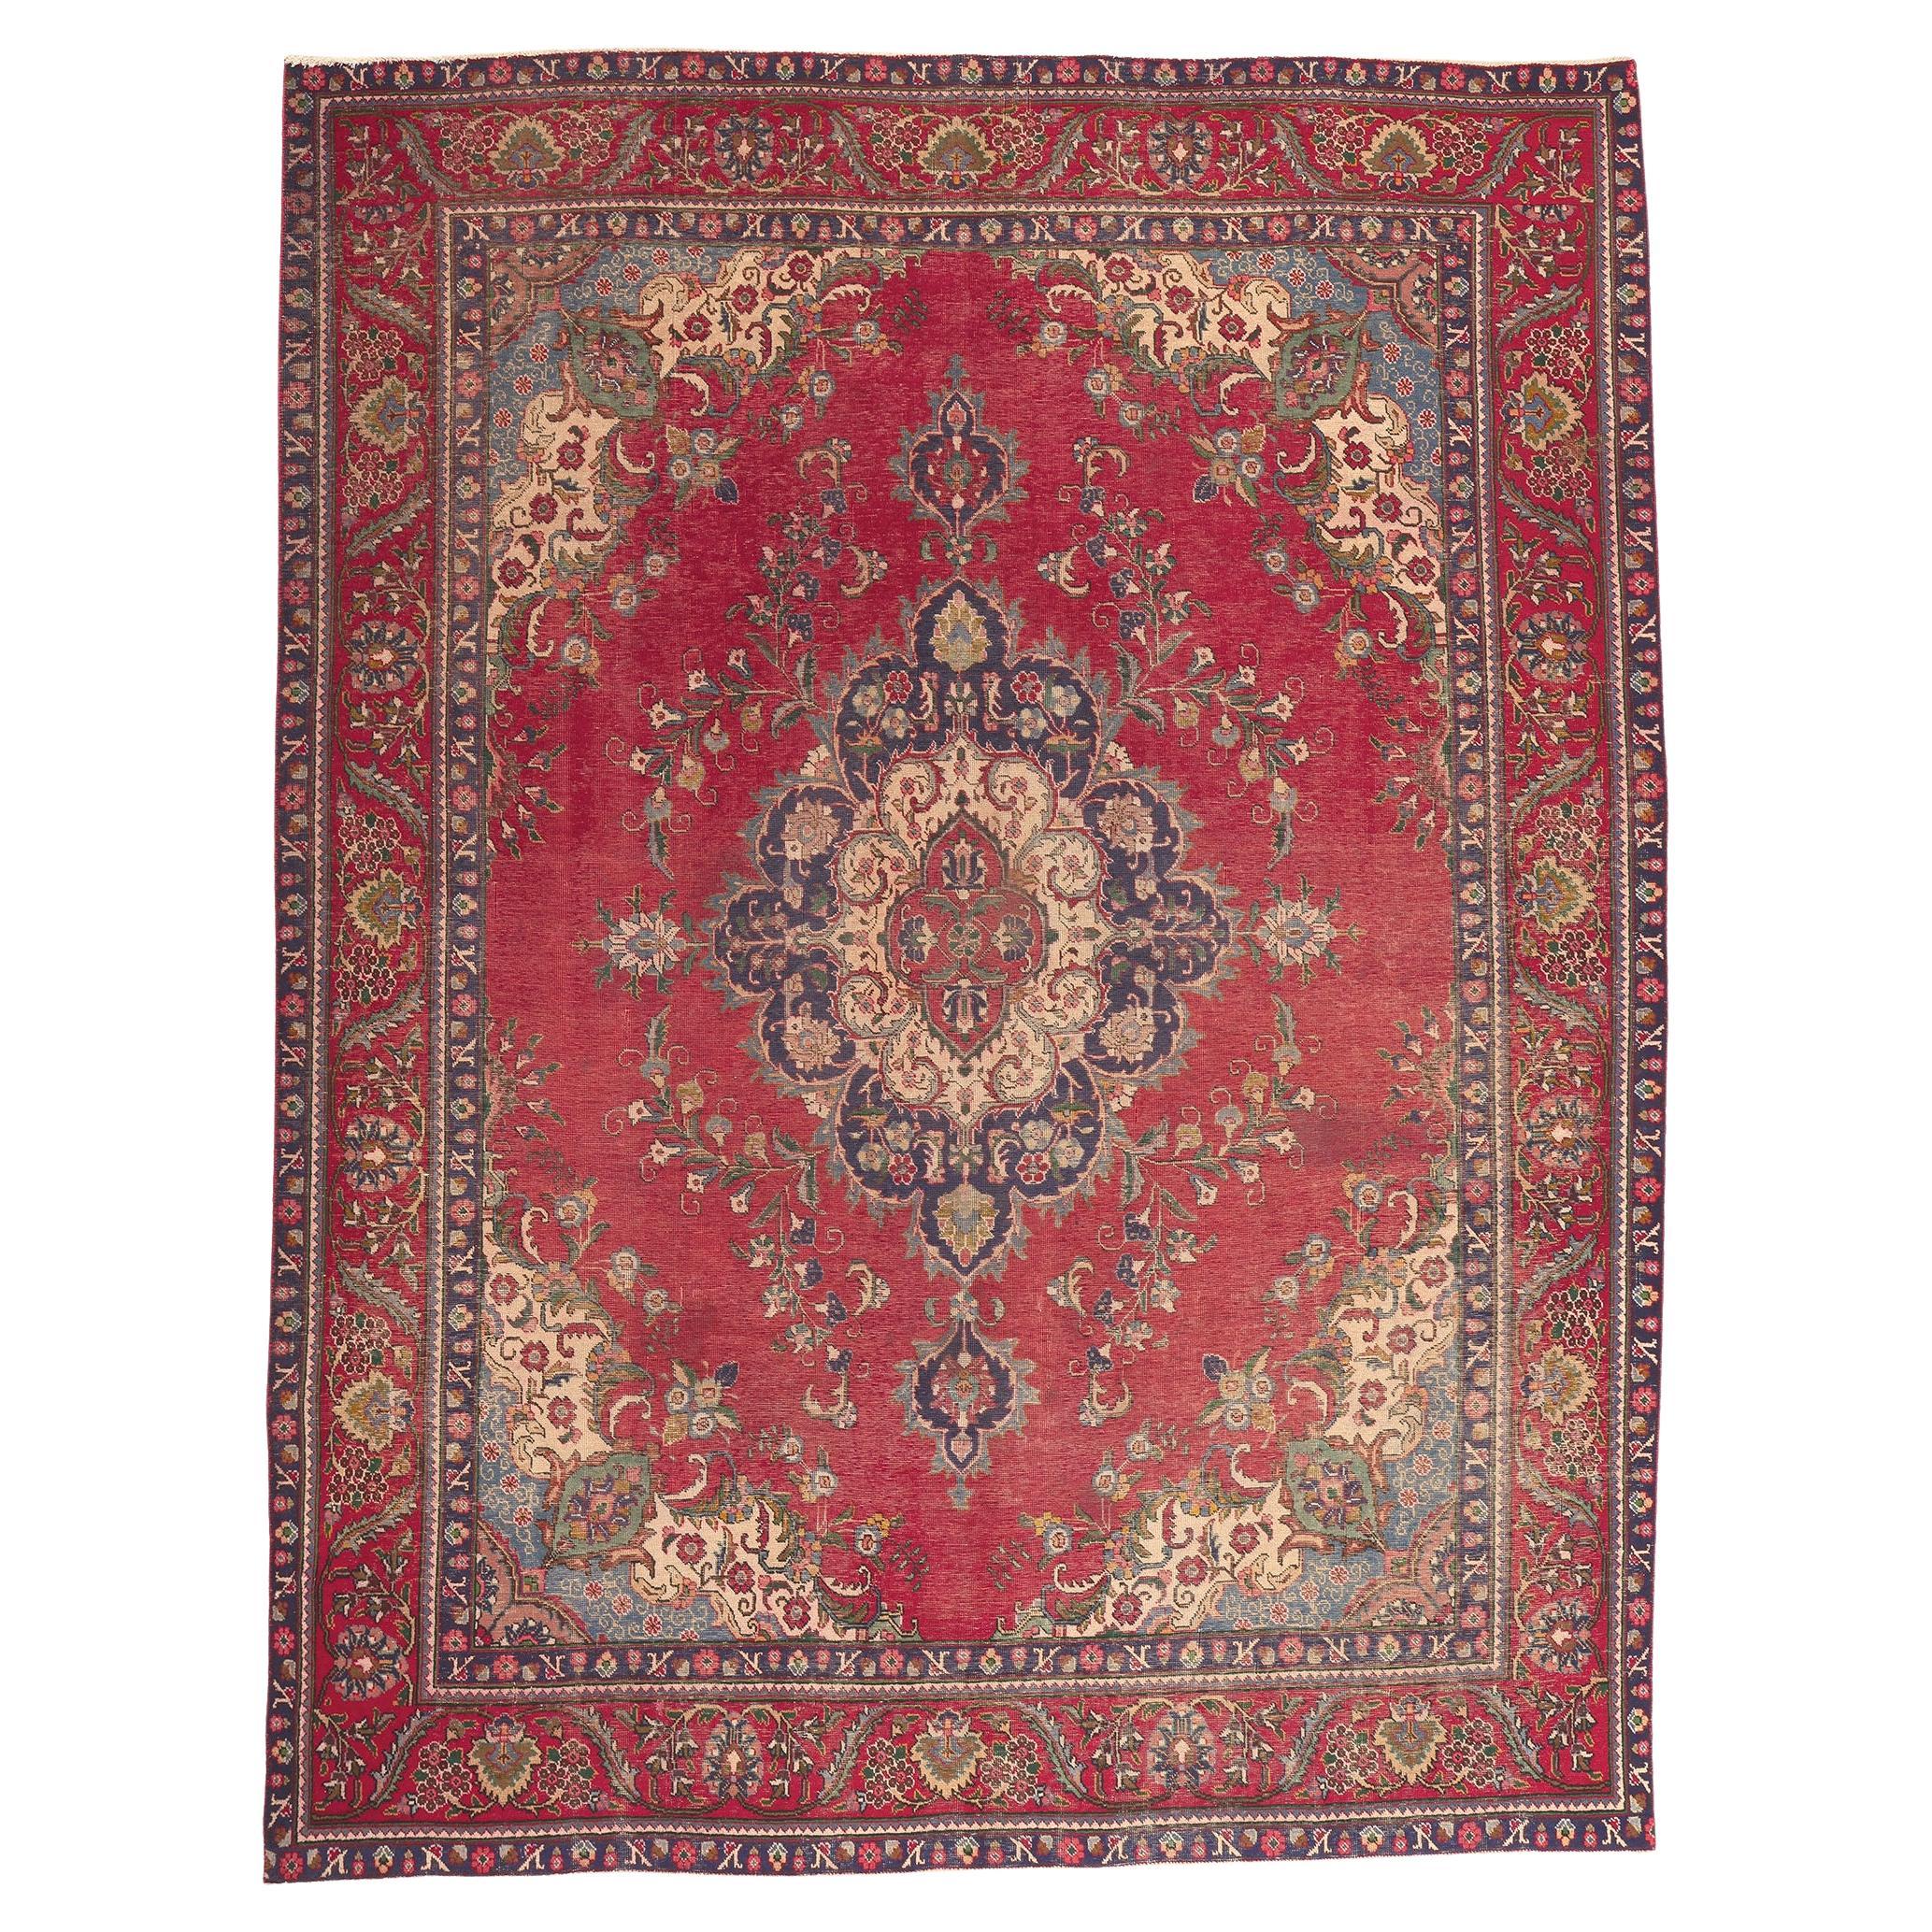 Antique-Worn Persian Tabriz Rug, Rustic Sensibility Meets Nostalgic Charm For Sale